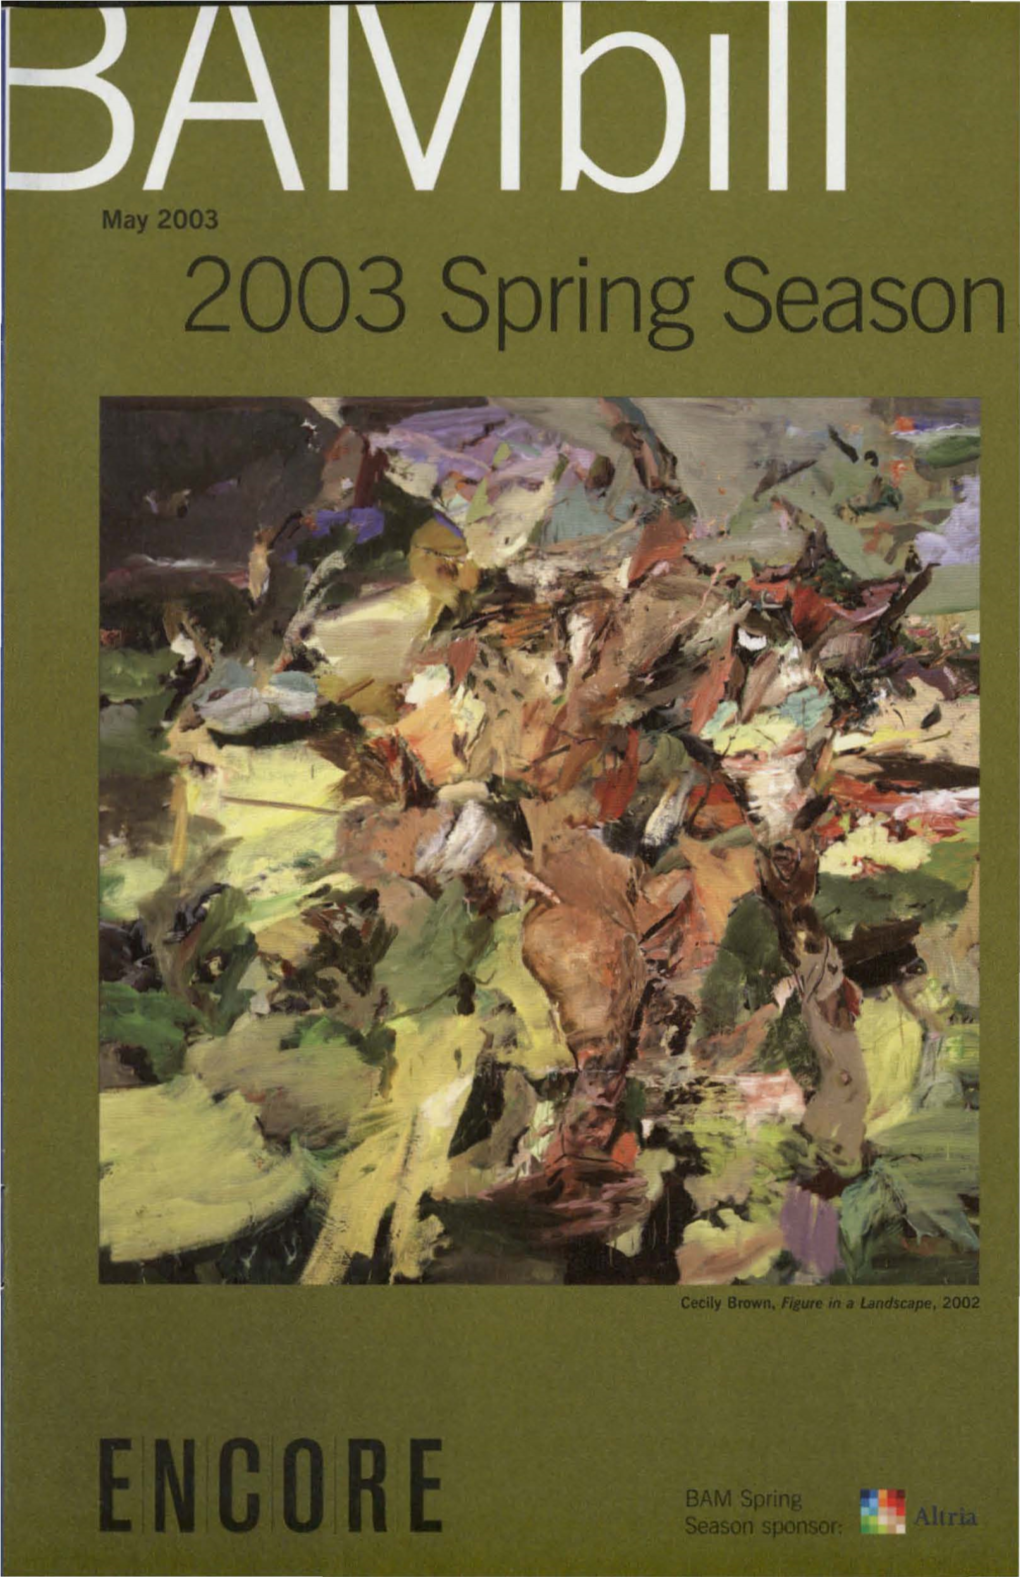 Brooklyn Philharmonic 49Th Season 2002-2003